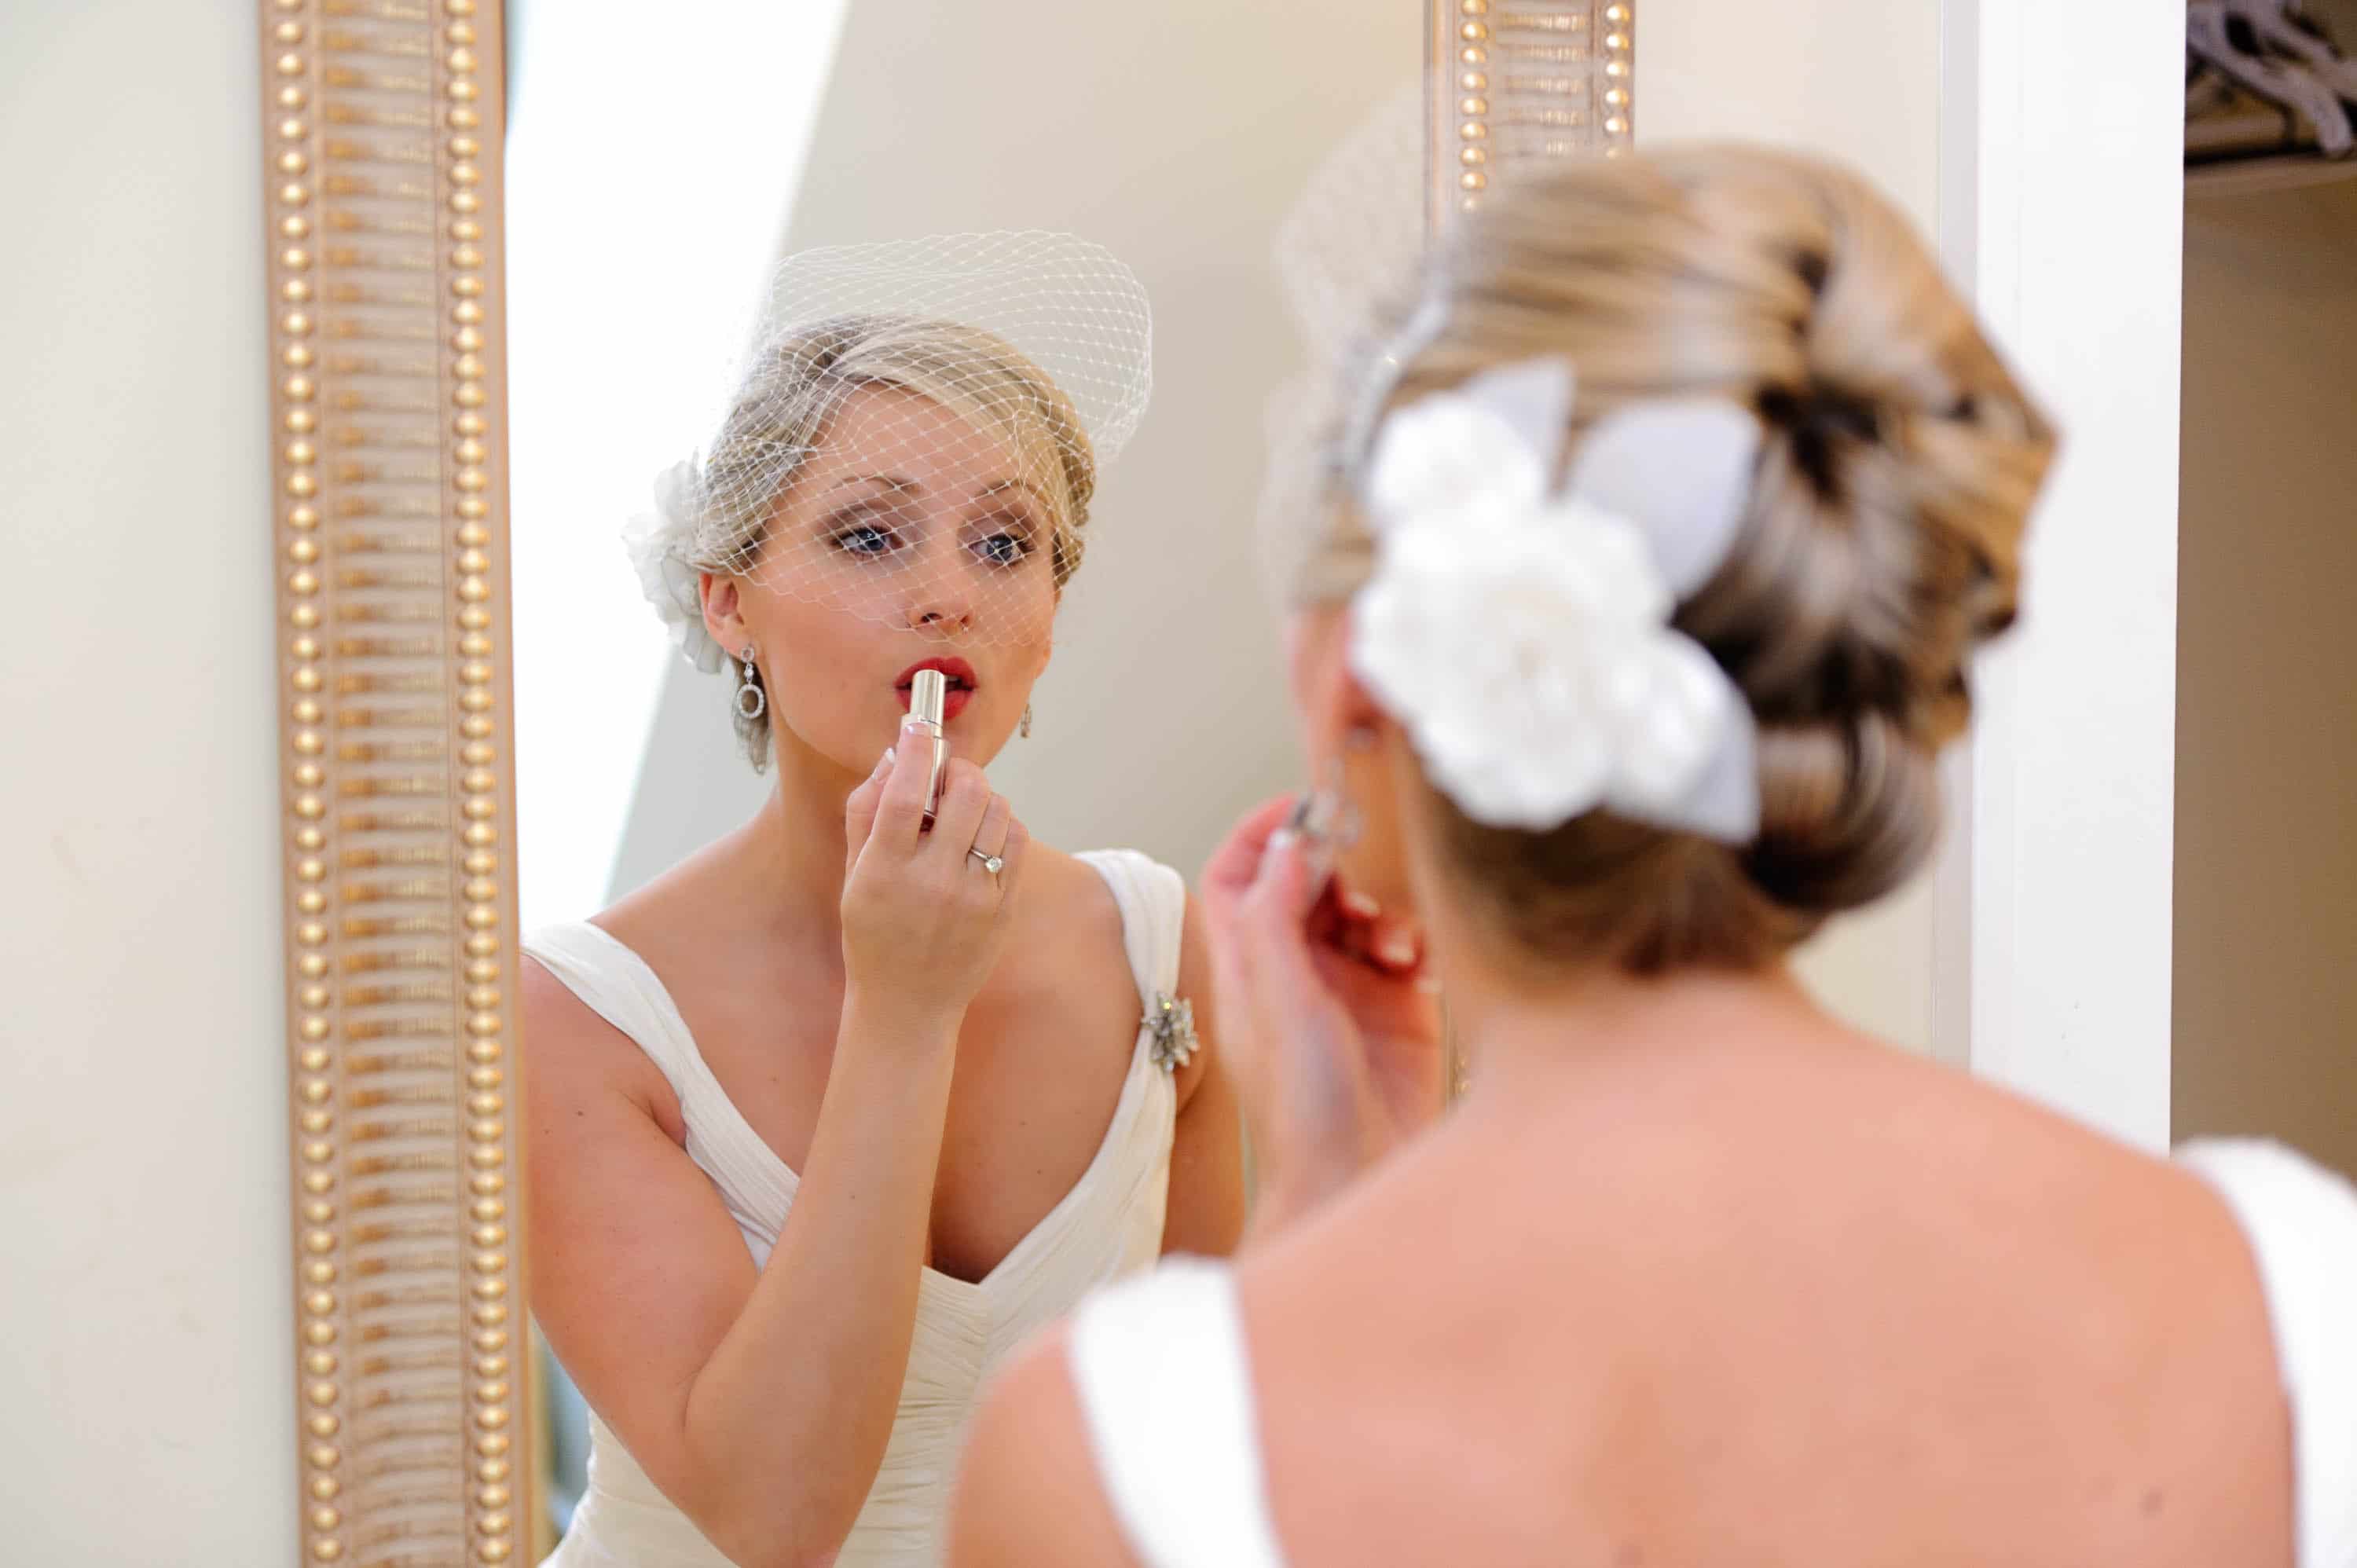 Bride getting ready in mirror